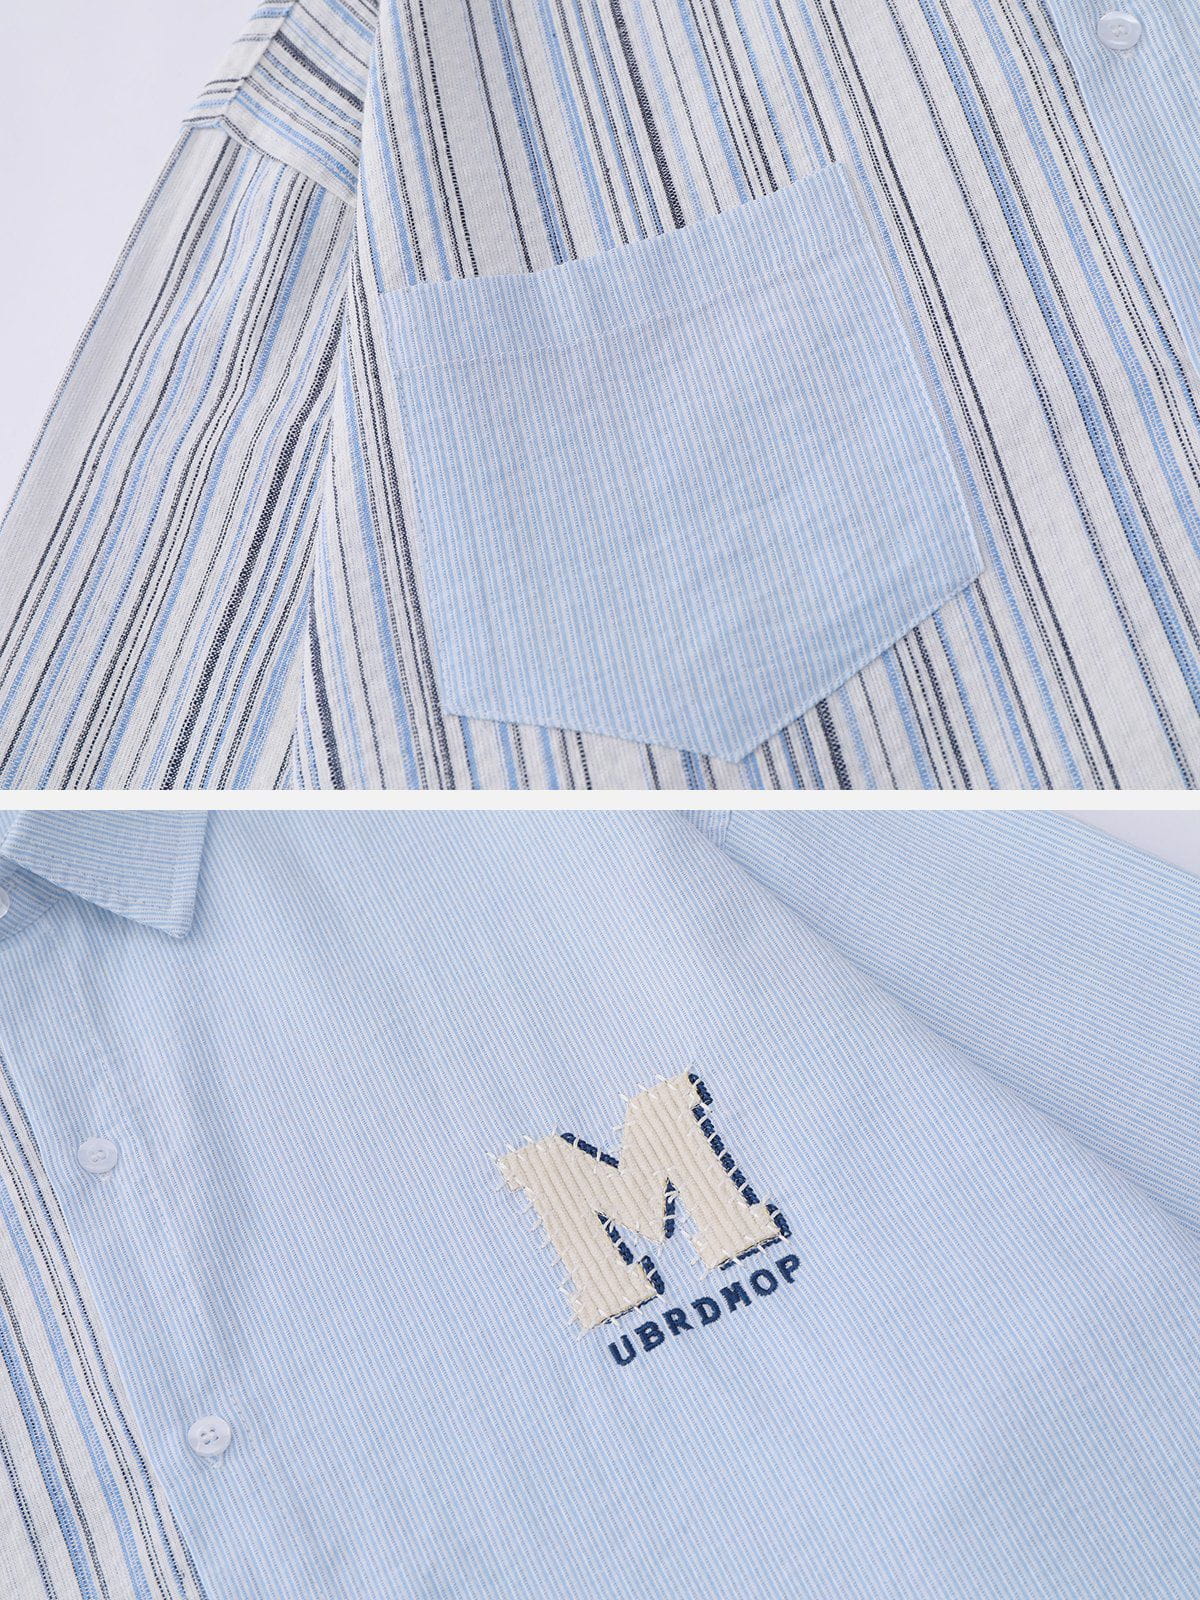 Majesda® - Patchwork Stripe Long Sleeve Shirt outfit ideas streetwear fashion